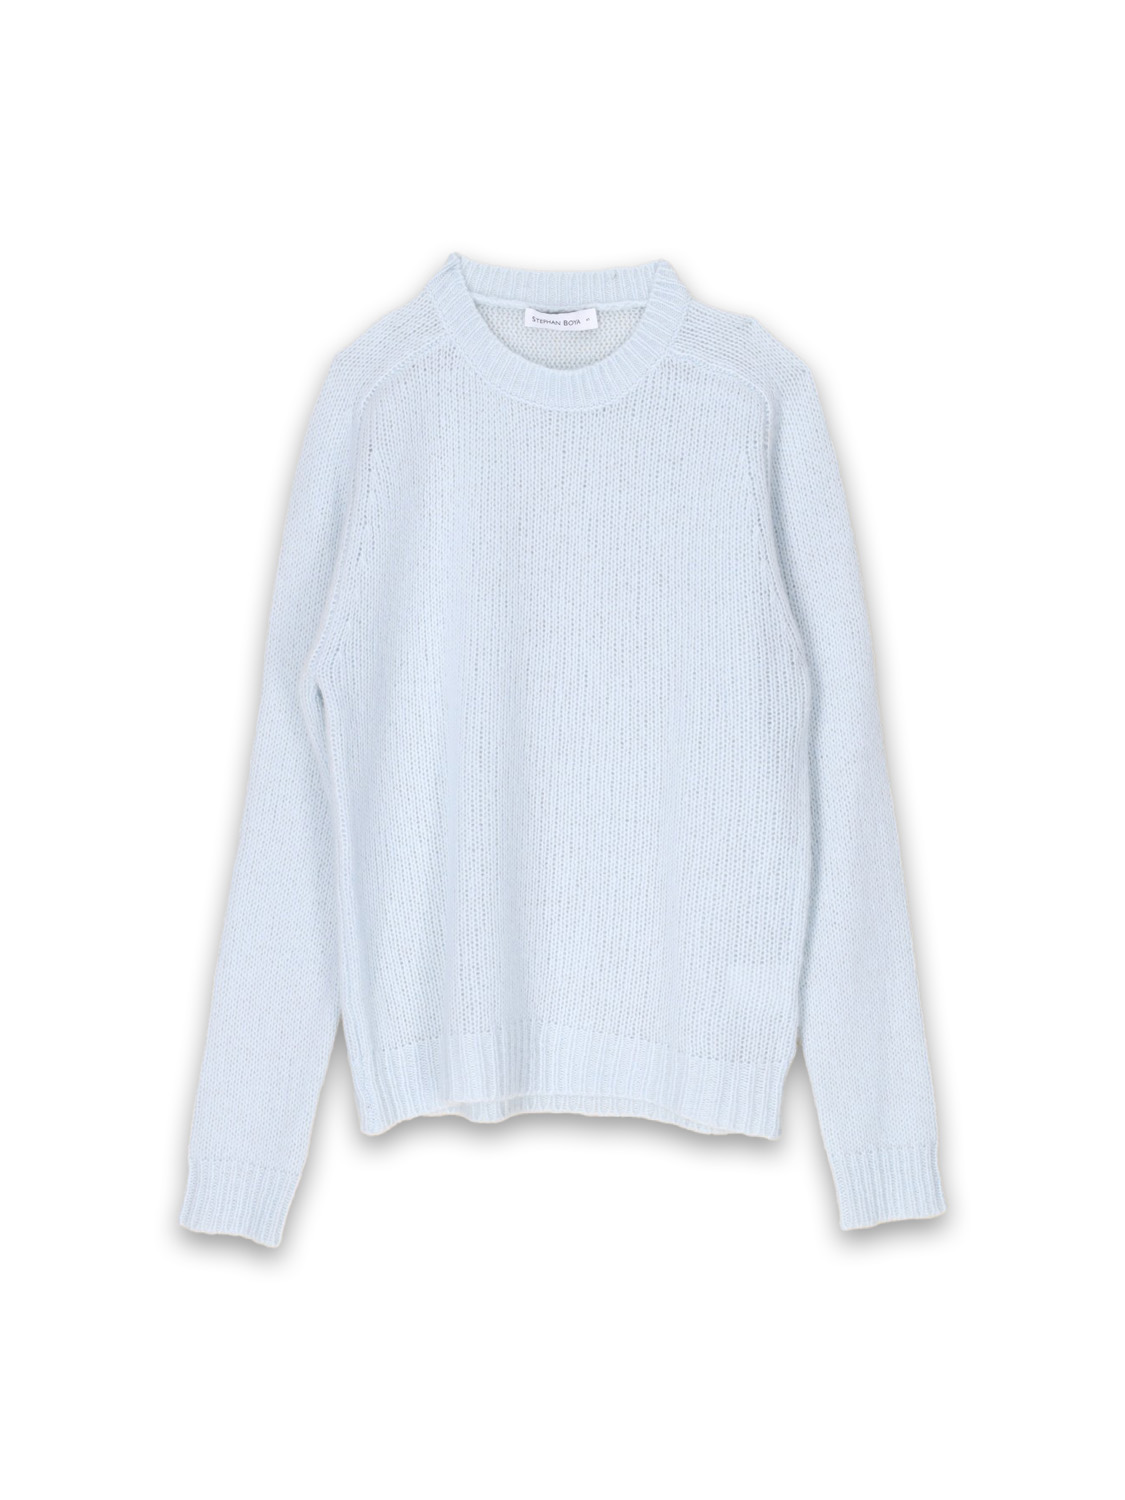 Boya Leo - Lightweight knitted sweater in cashmere  